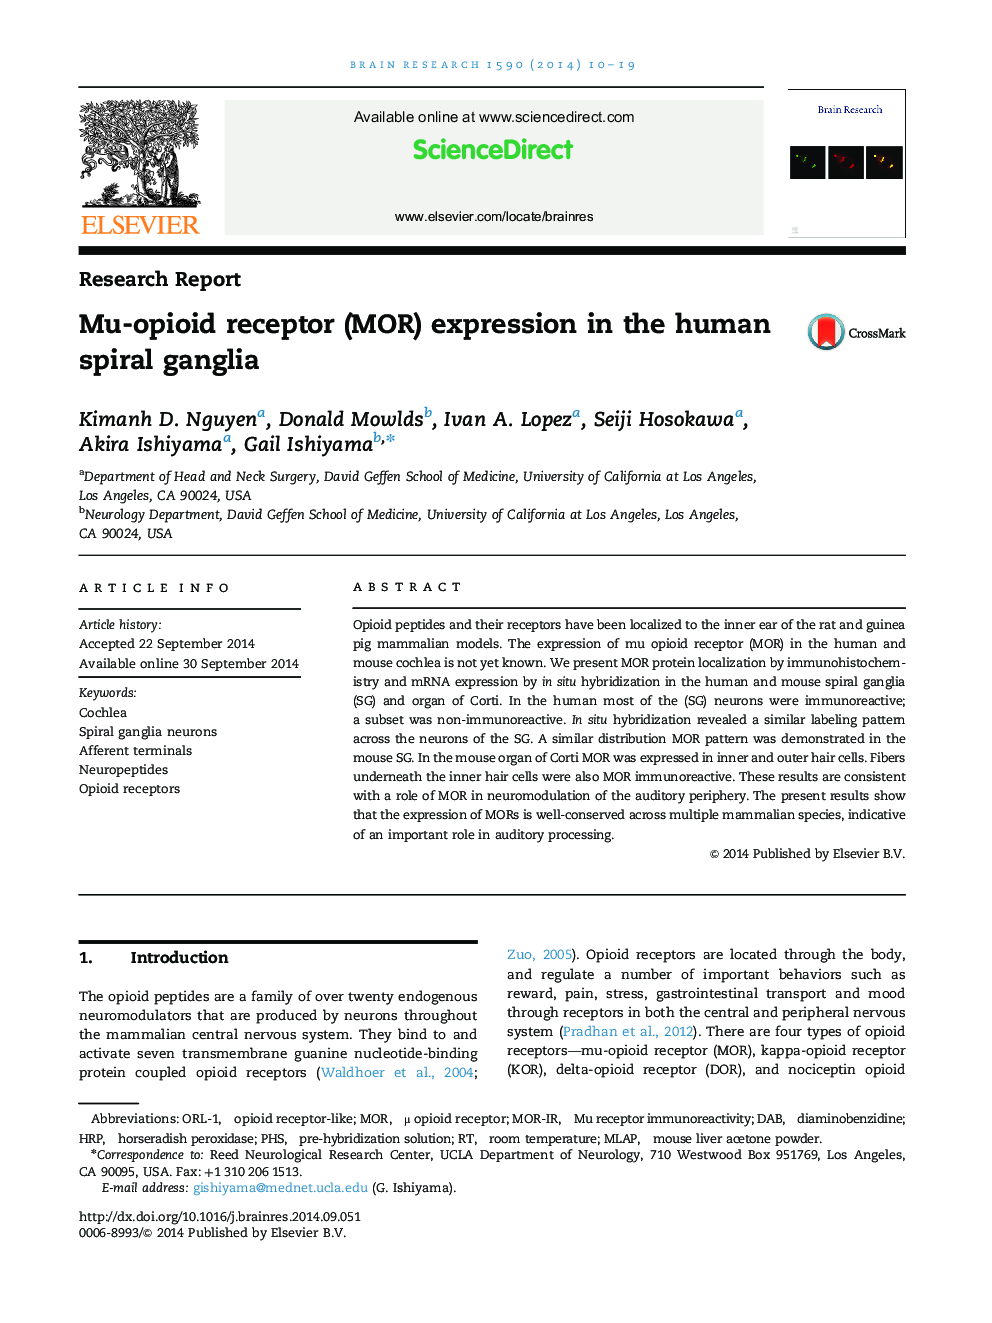 Mu-opioid receptor (MOR) expression in the human spiral ganglia